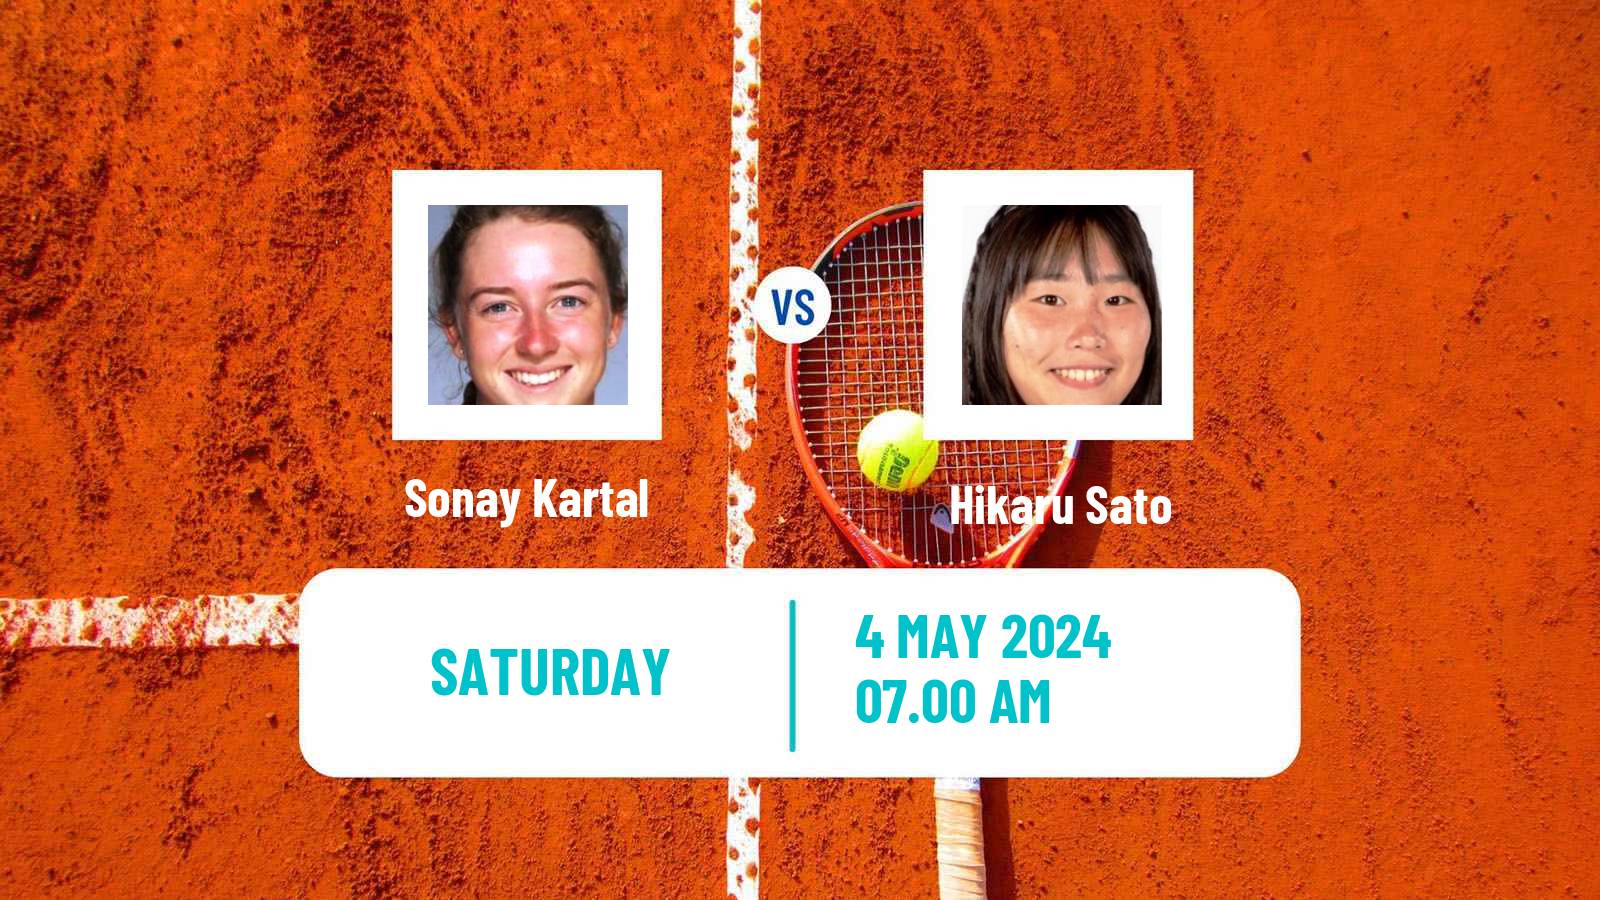 Tennis ITF W35 Nottingham 2 Women Sonay Kartal - Hikaru Sato